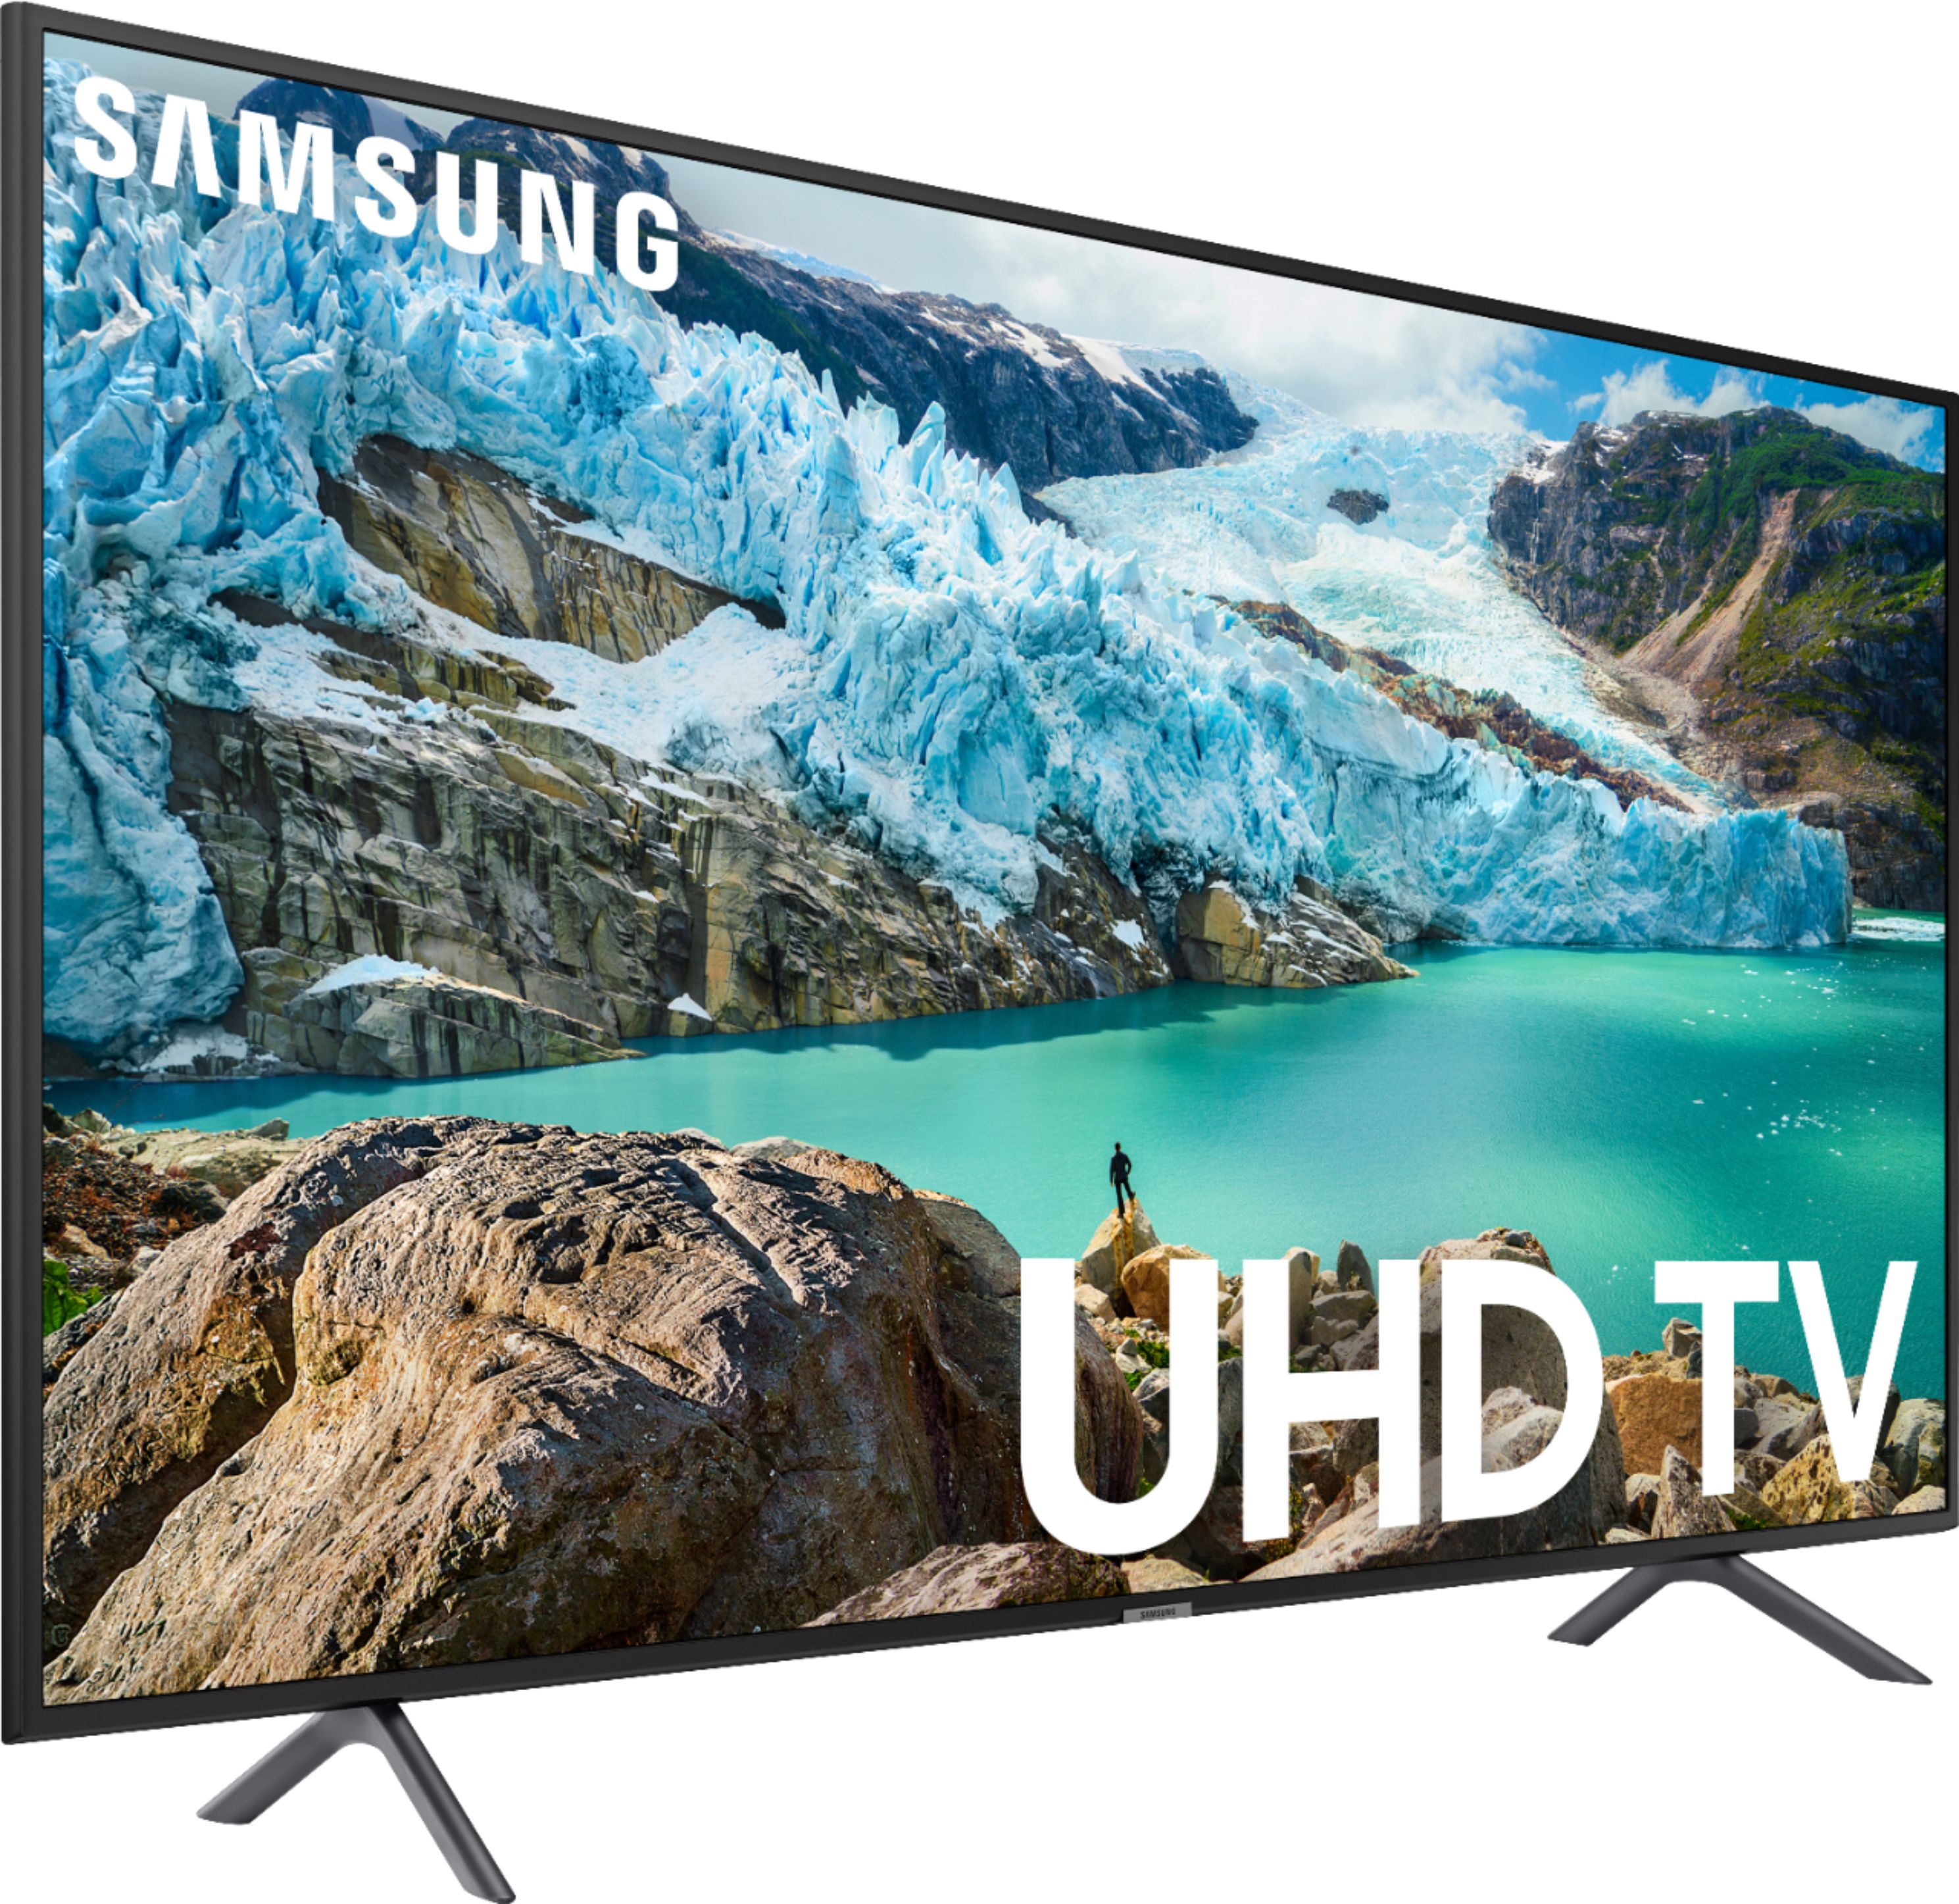 Angle View: Samsung - 65" Class 7 Series LED 4K UHD Smart Tizen TV